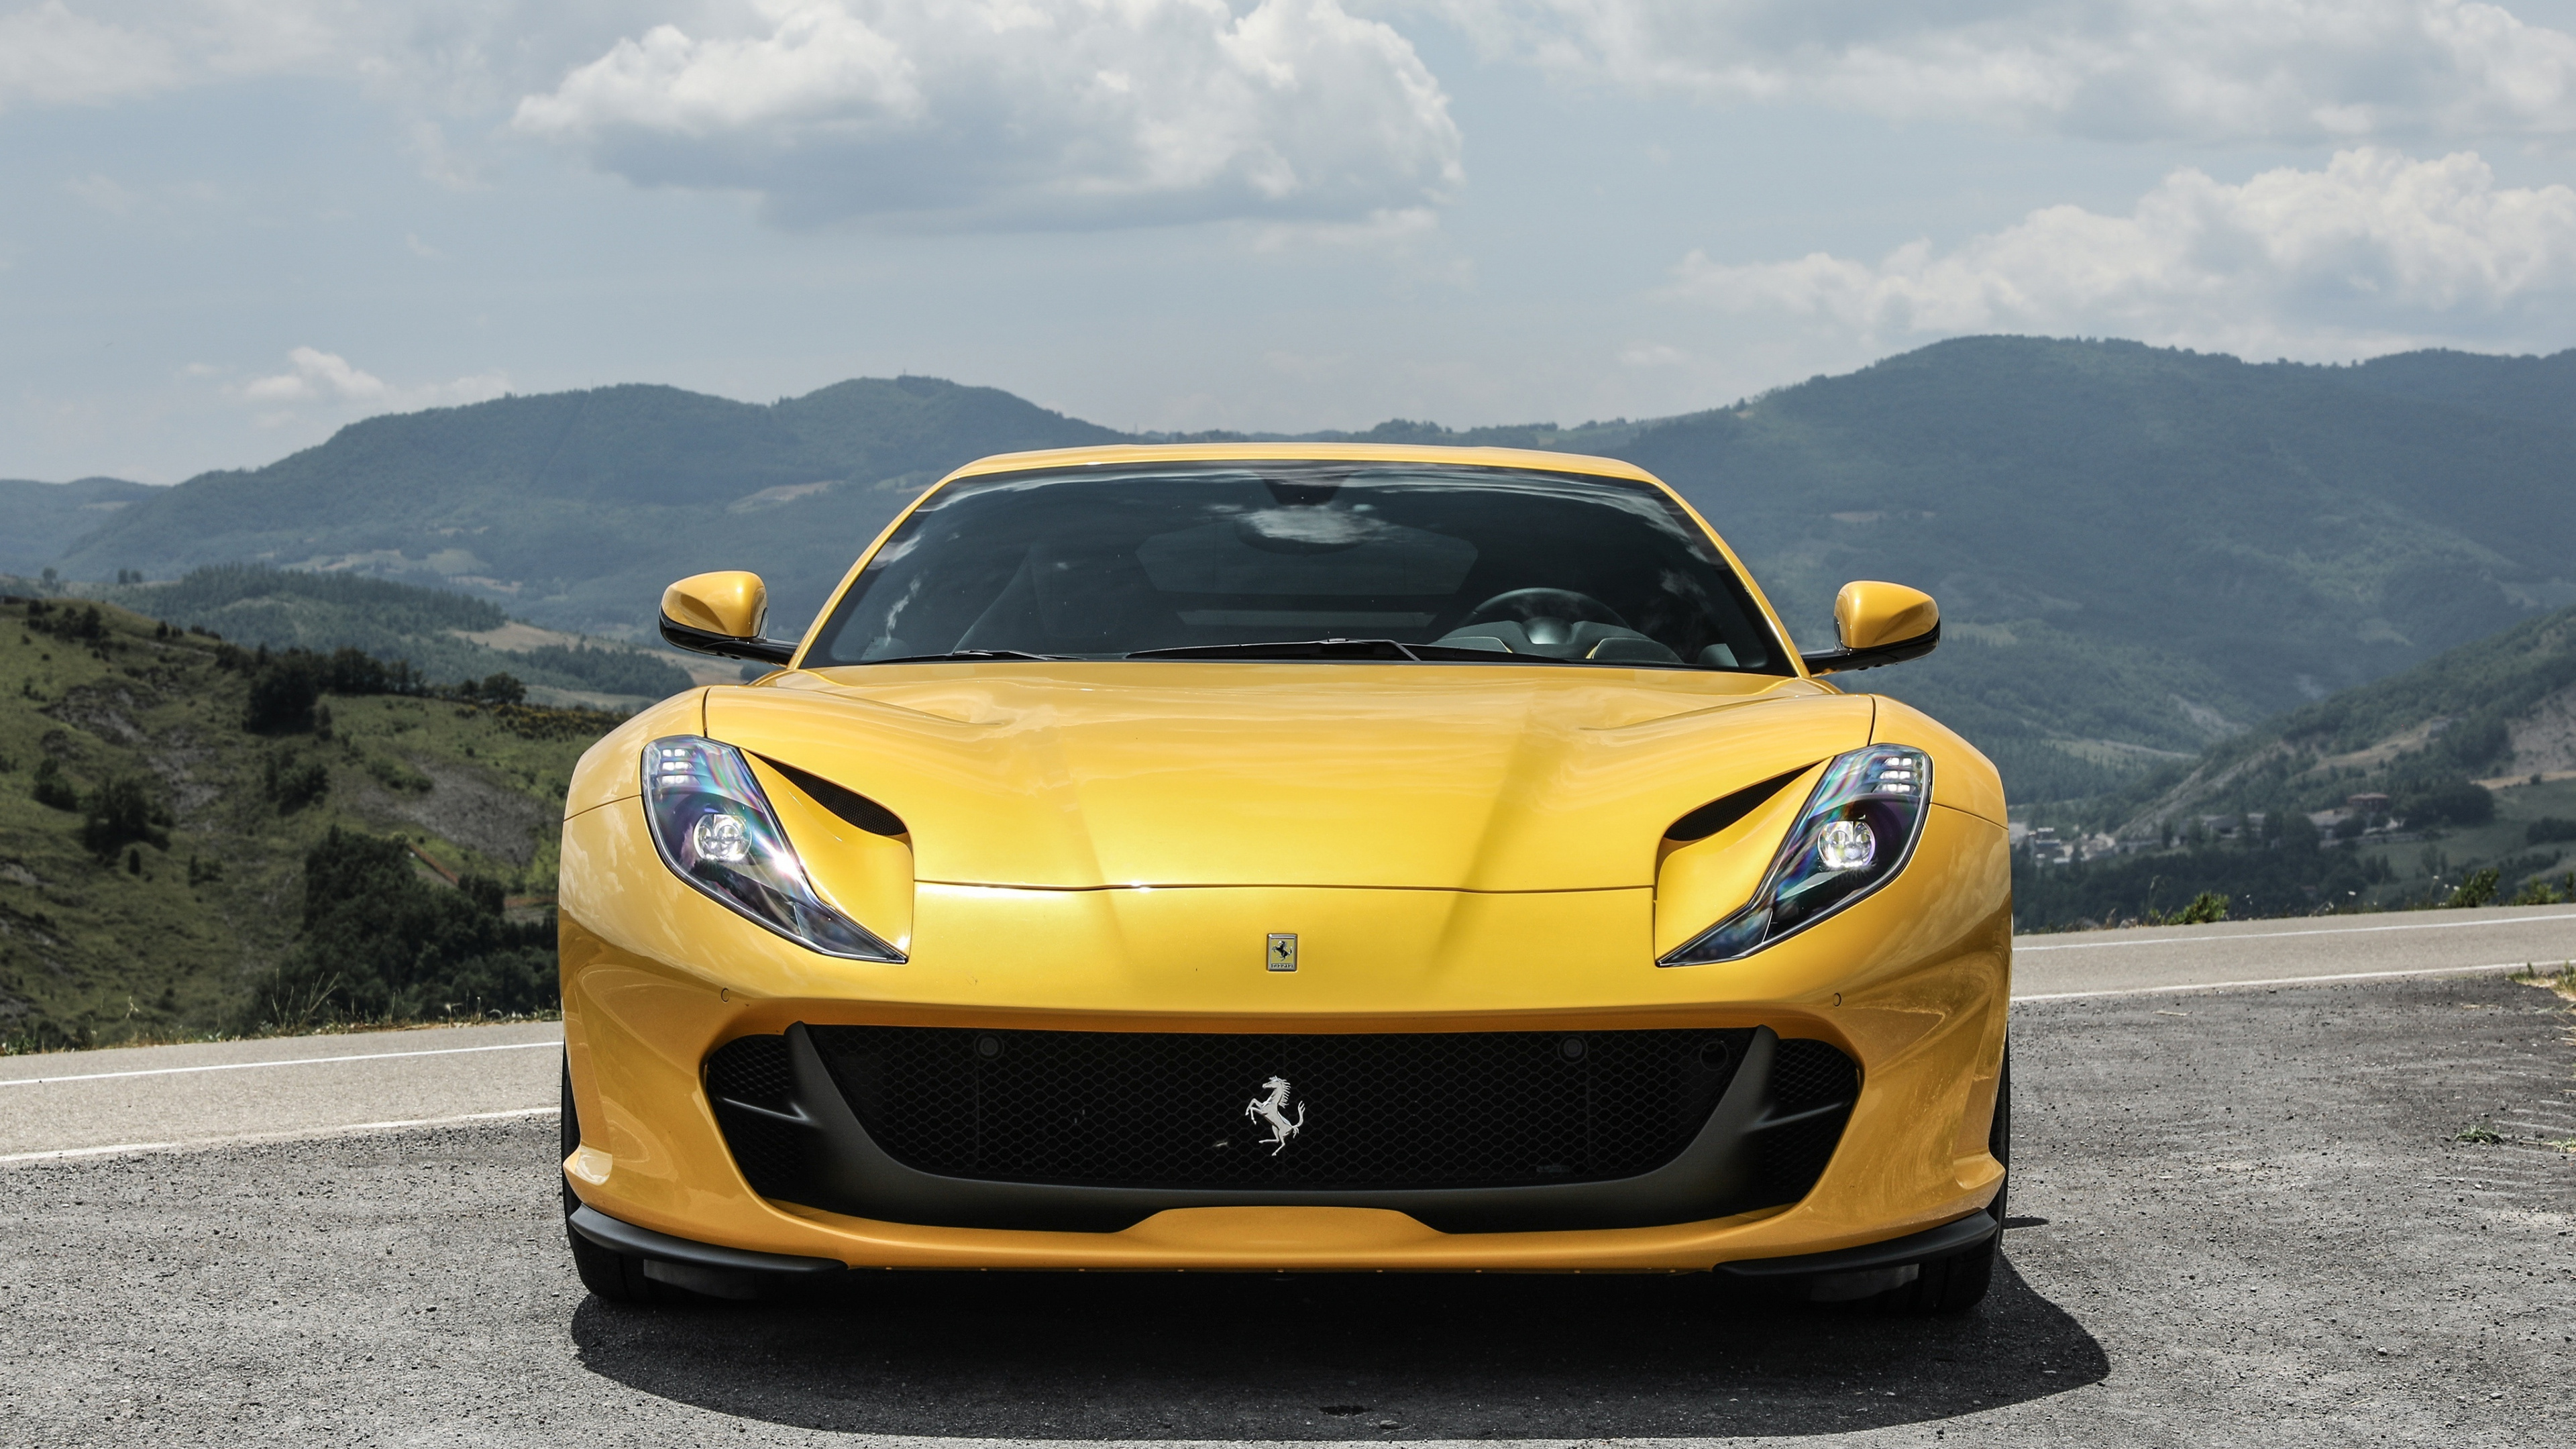 Ferrari 812 Superfast, Yellow sports car, UHD wallpaper, Widescreen, 3840x2160 4K Desktop